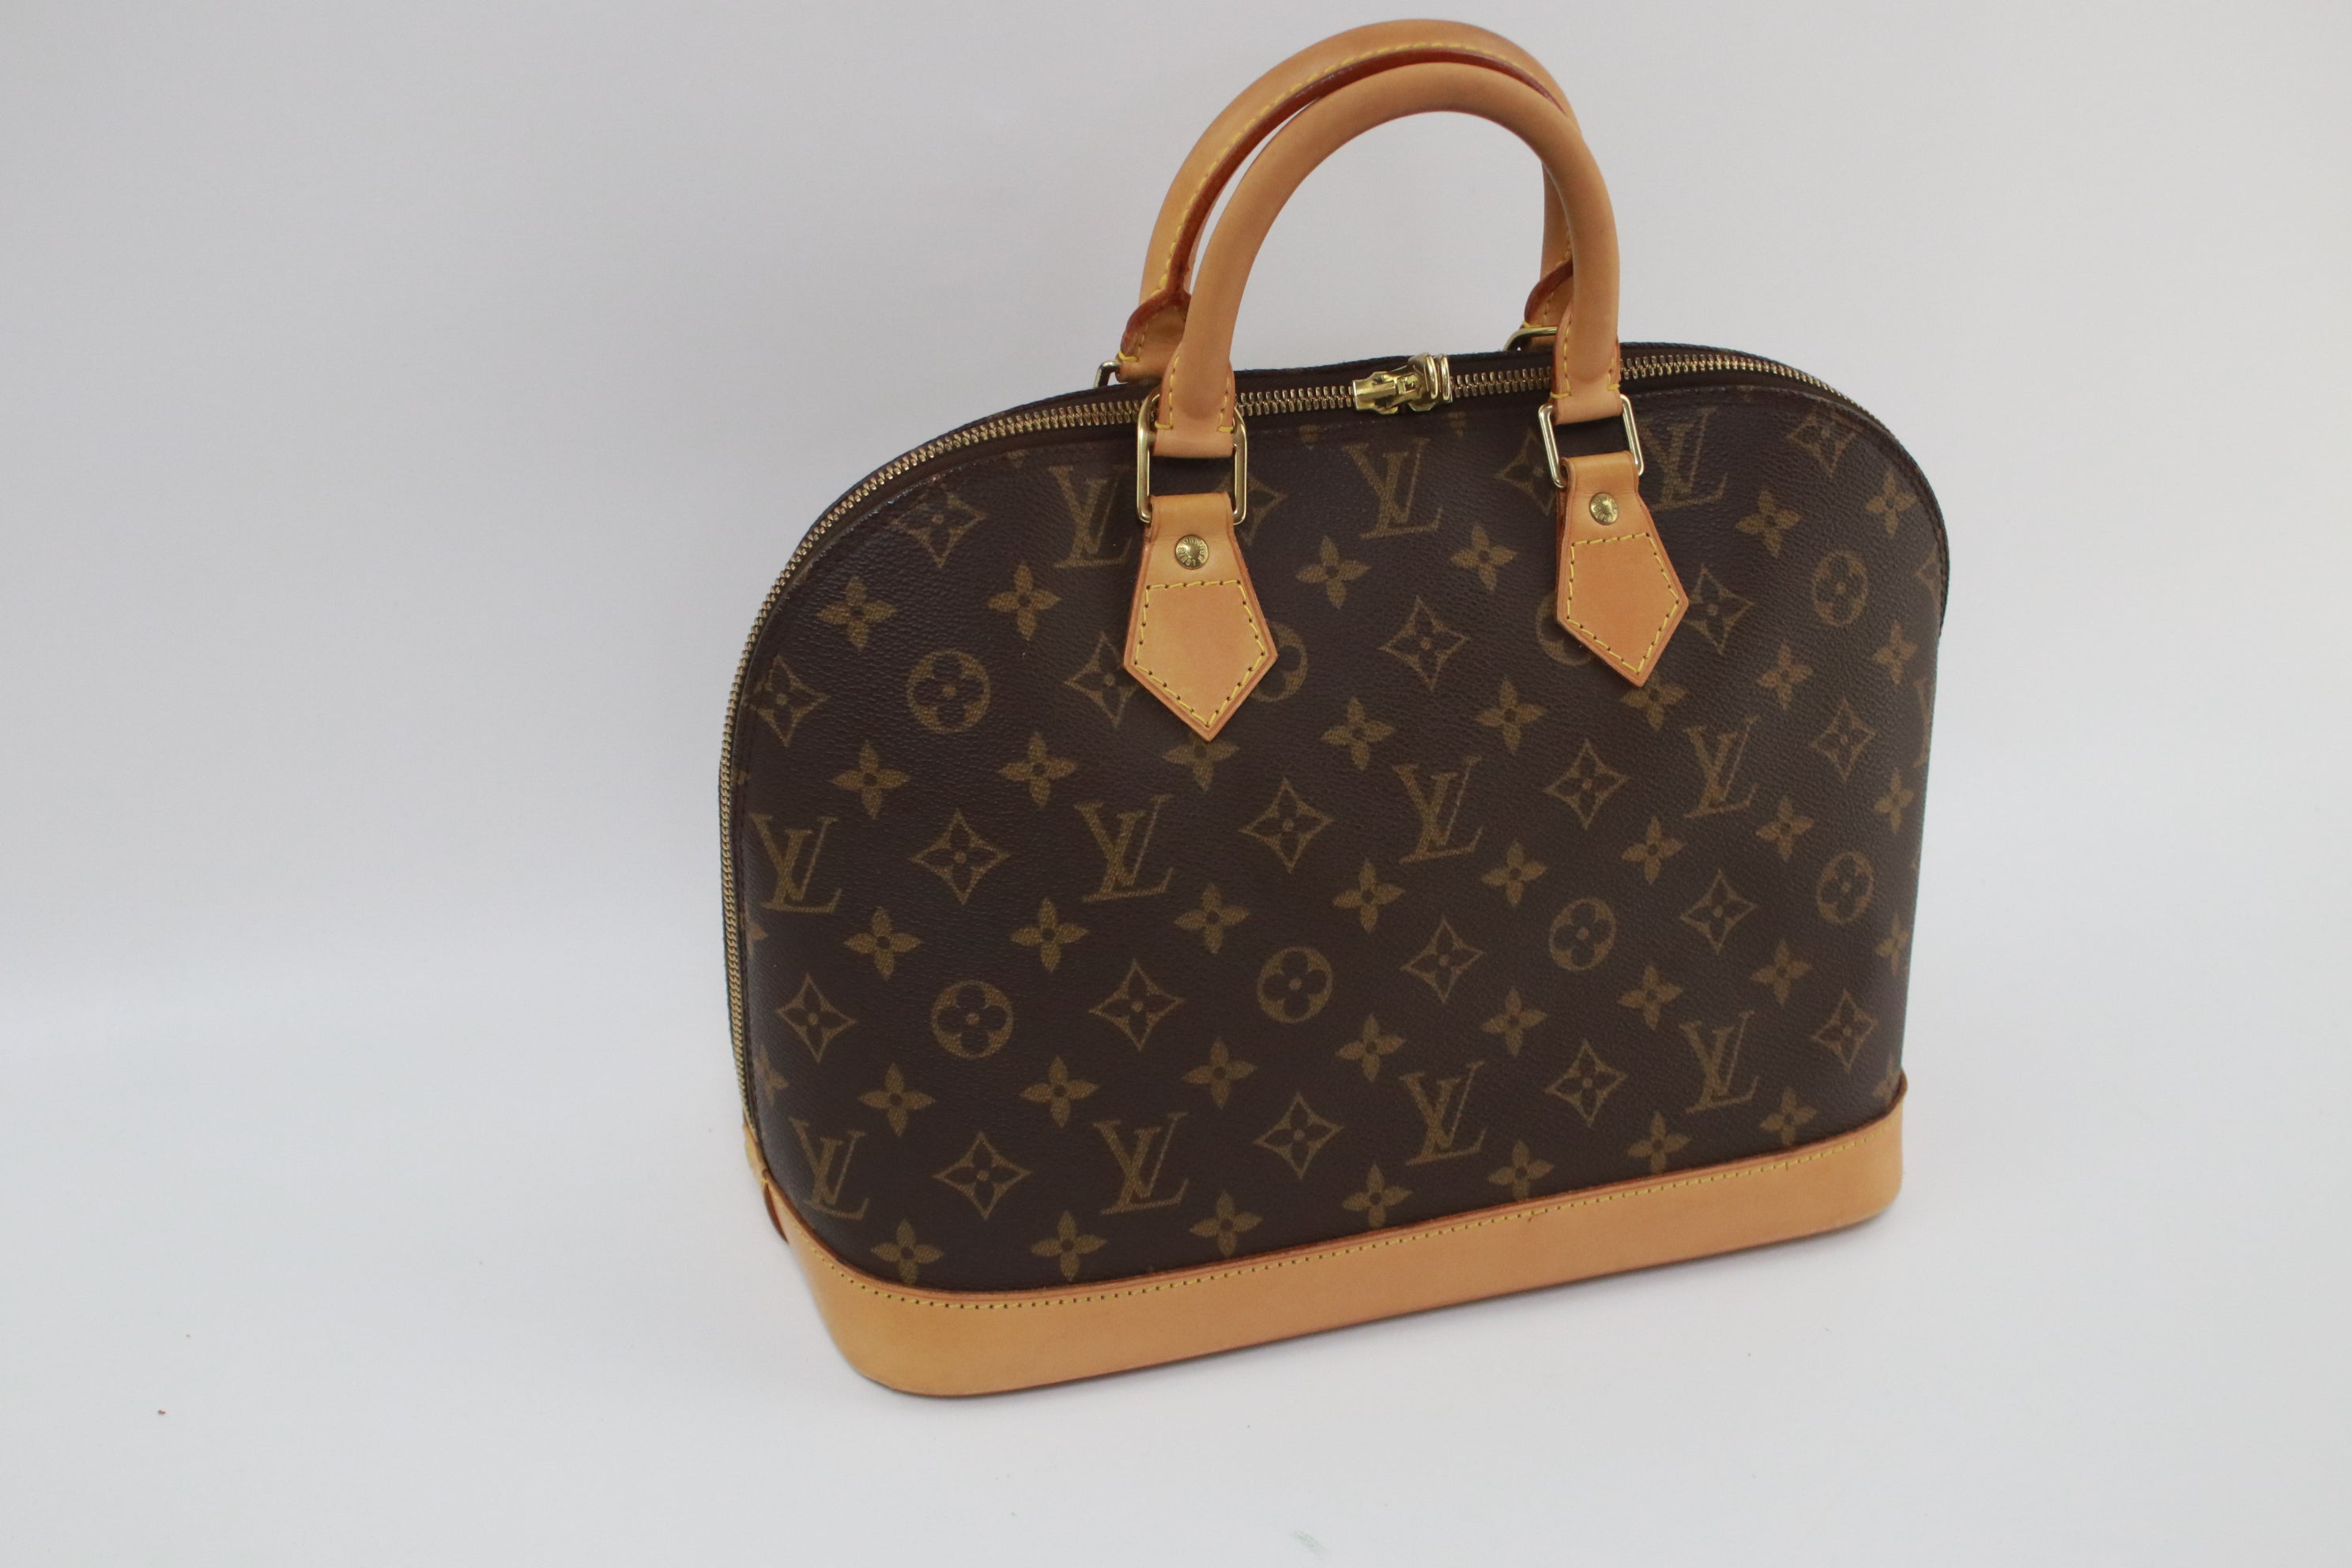 Buy [Used] LOUIS VUITTON Alma PM Handbag Monogram M51130 from